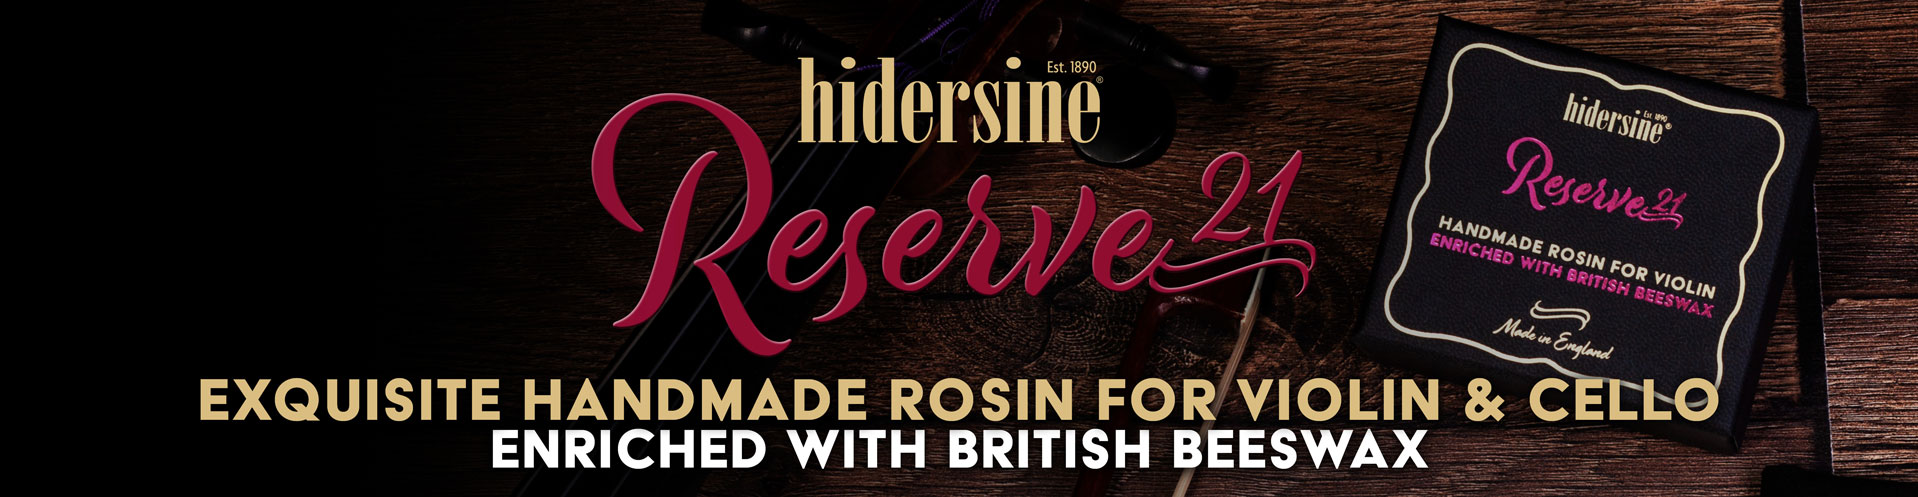 Hidersine-Reserve-21-Web-Banner